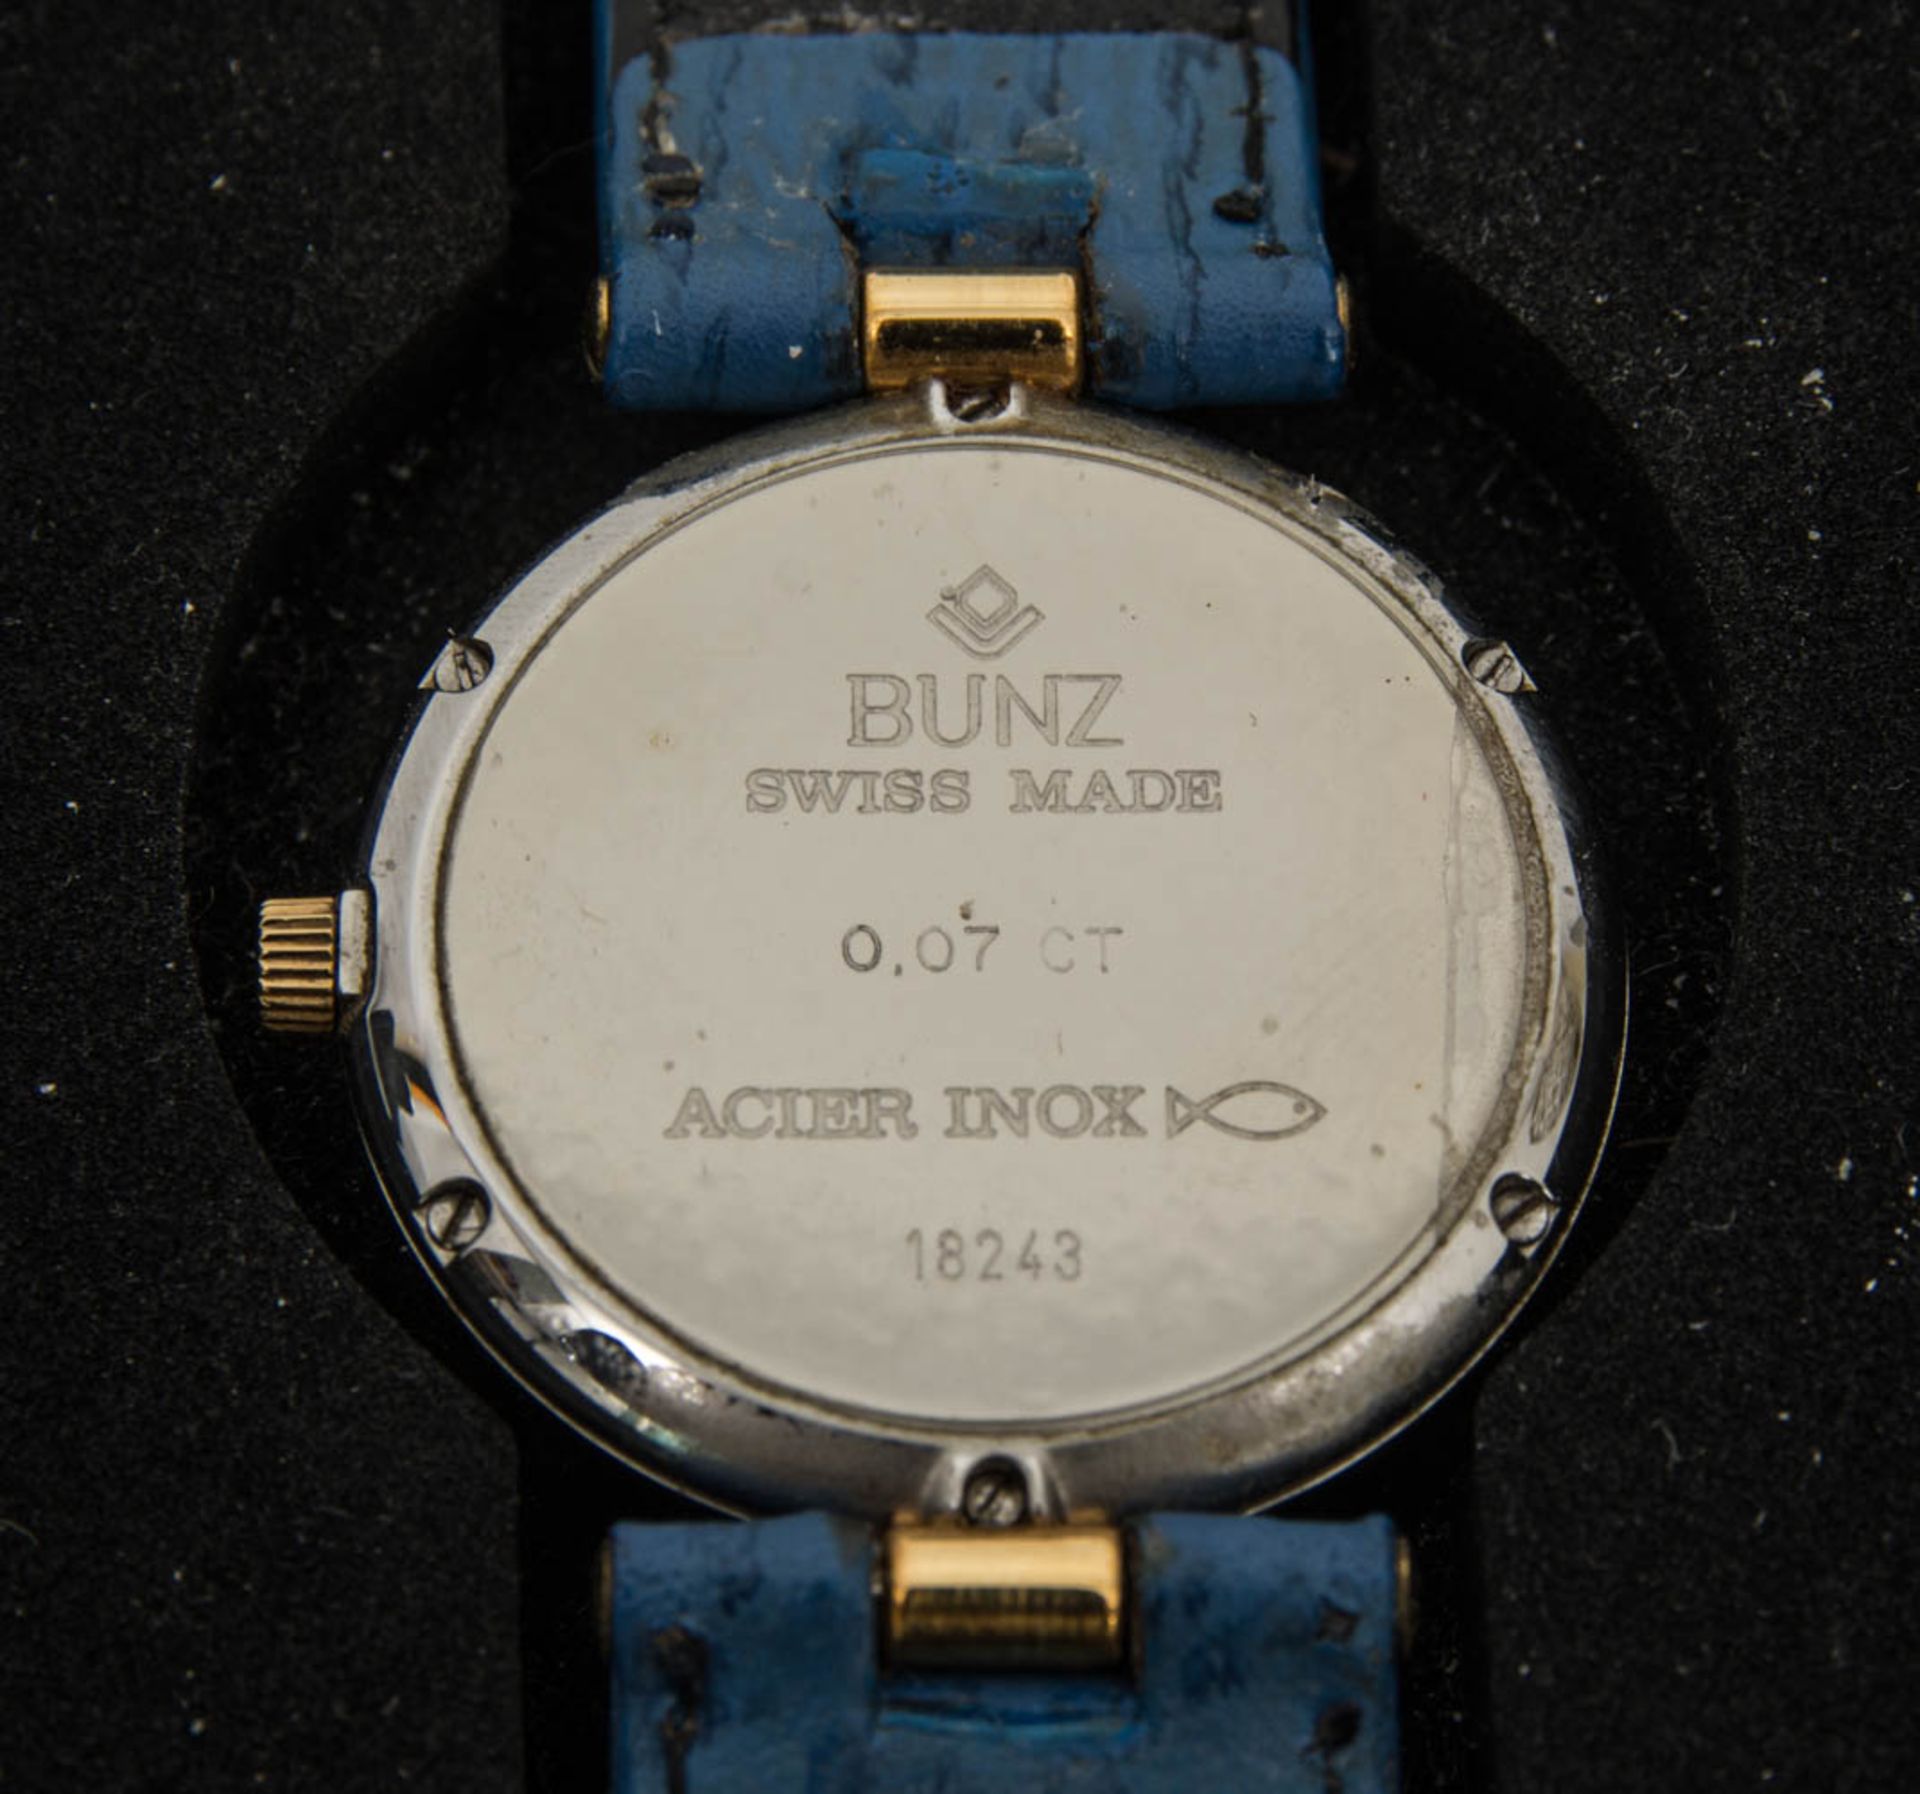 Bunz Quarzuhr mit Brillant 0,07 Ct.Im Originalkarton mit Papieren. No. 18243. - Image 4 of 6